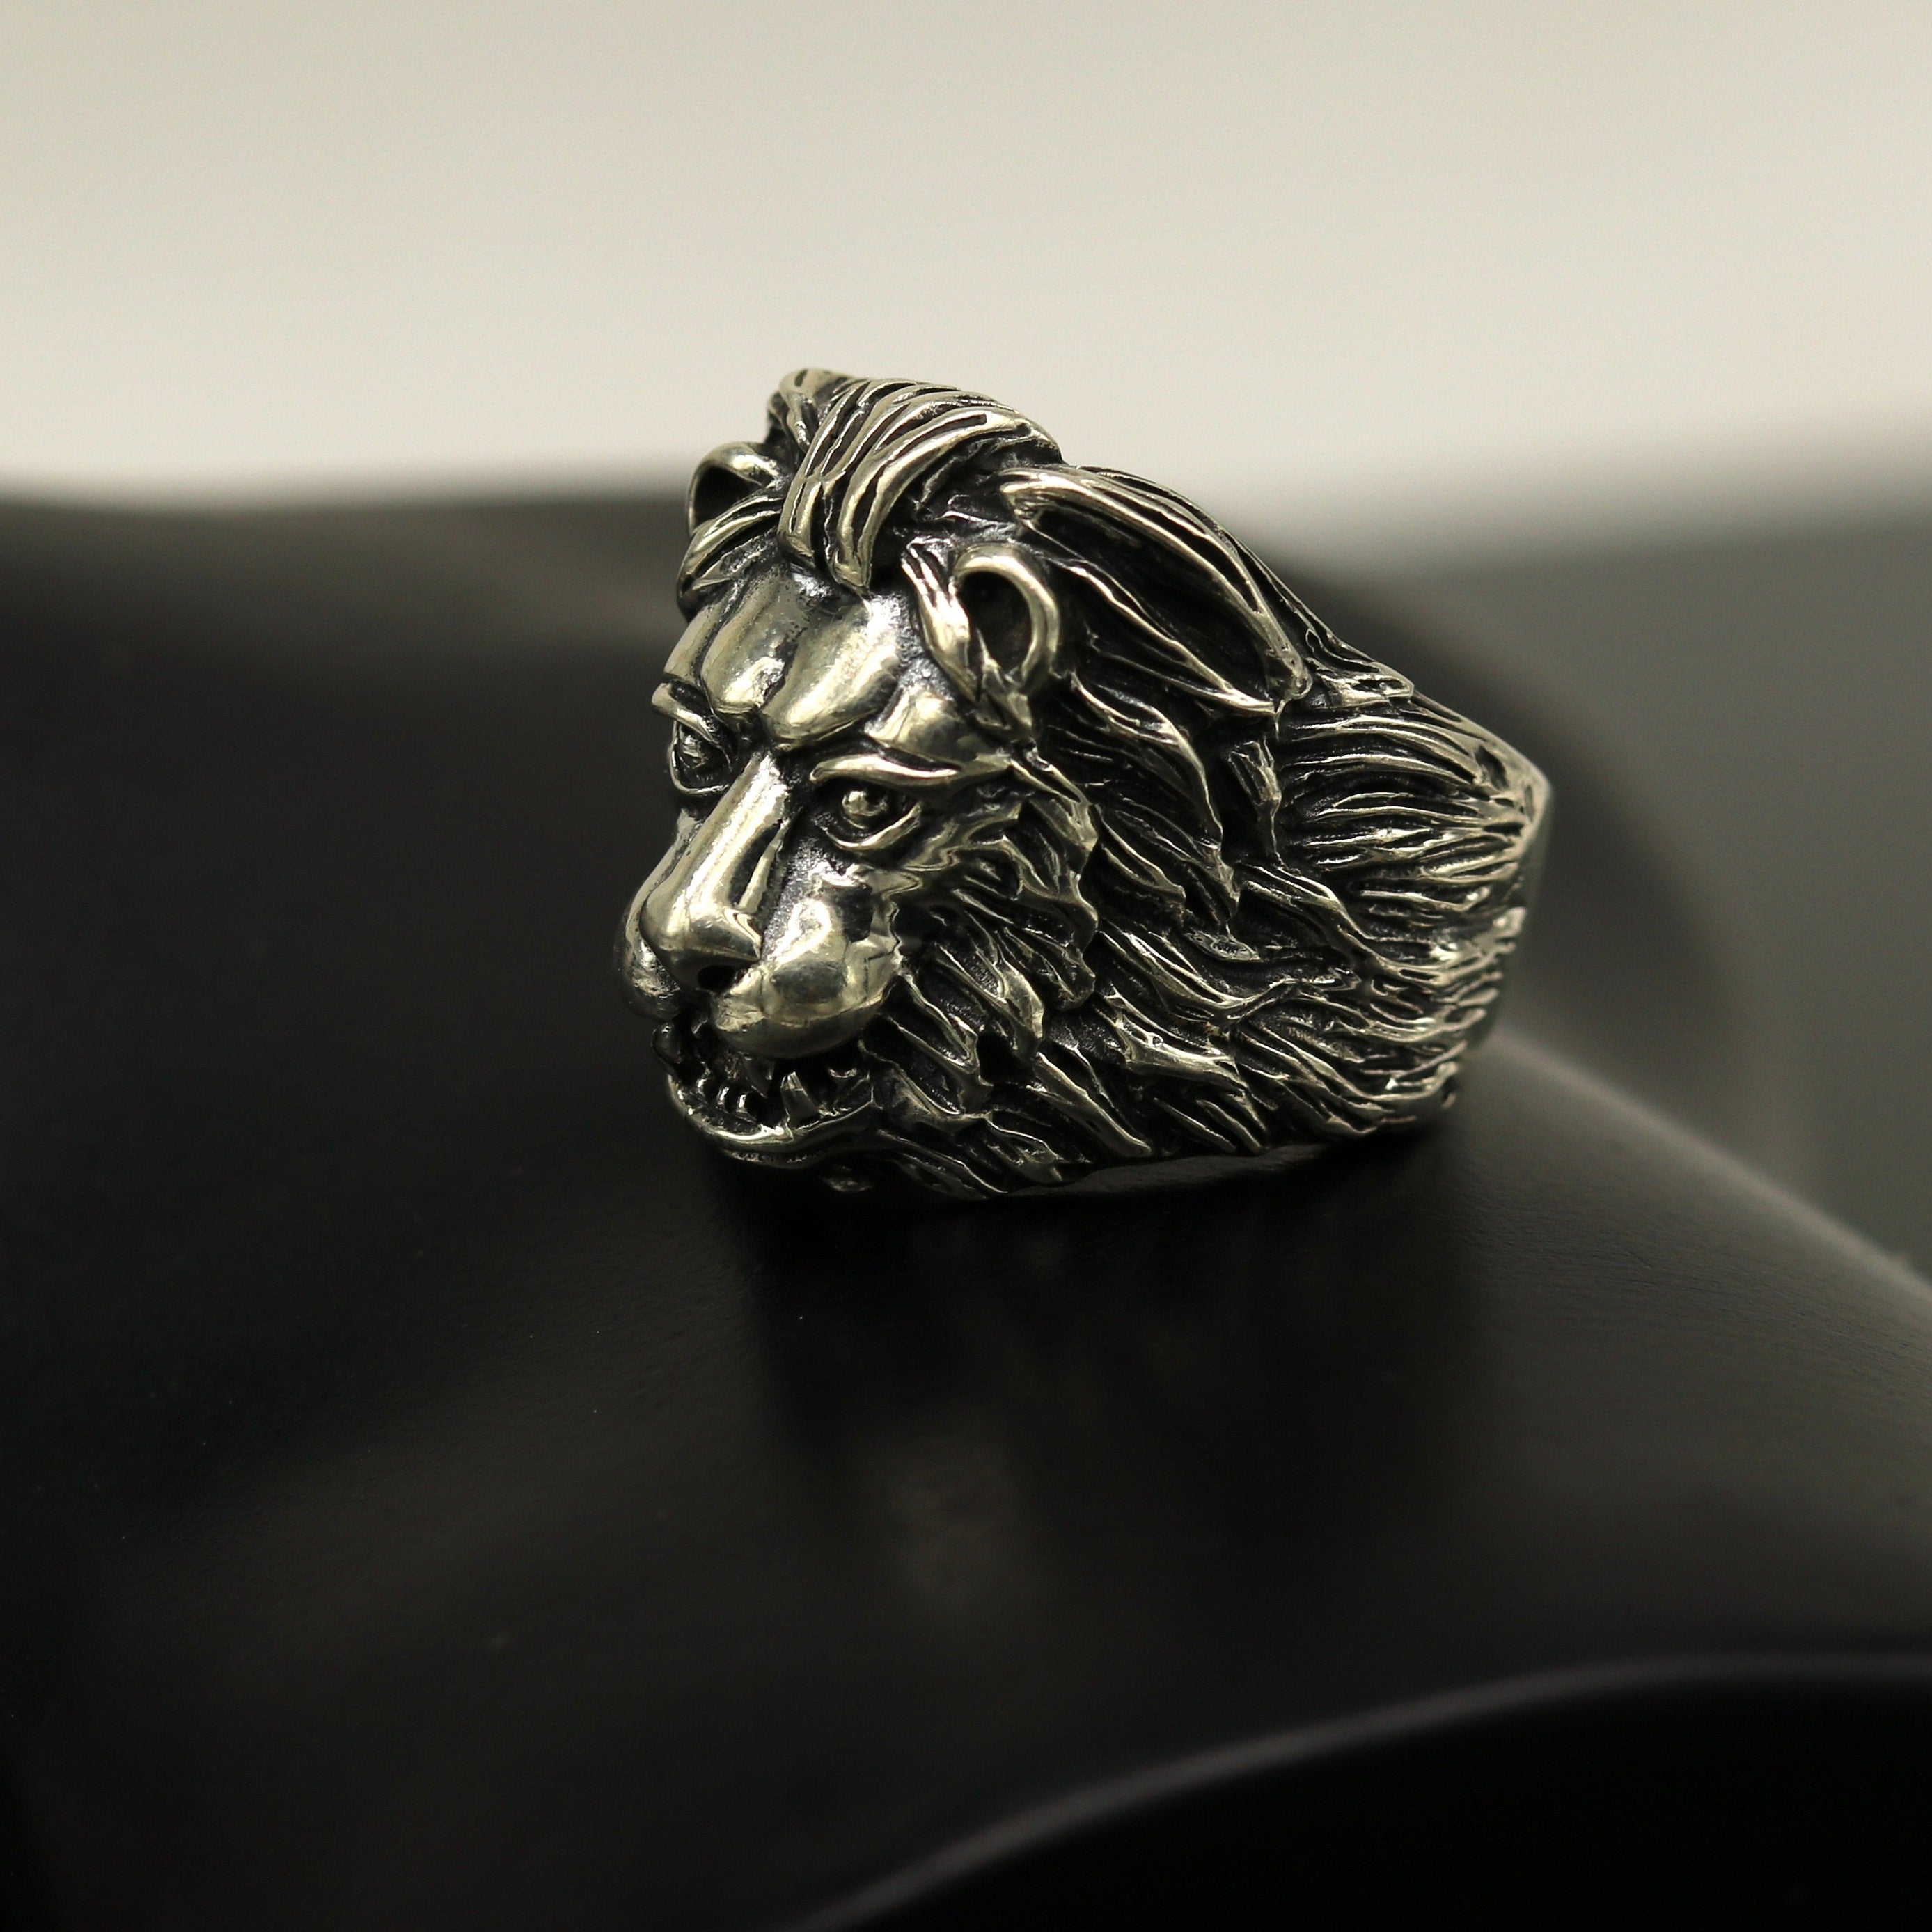 Real 925 Sterling Silver Ring Lion King Adjustable Size 9 10 11 | eBay